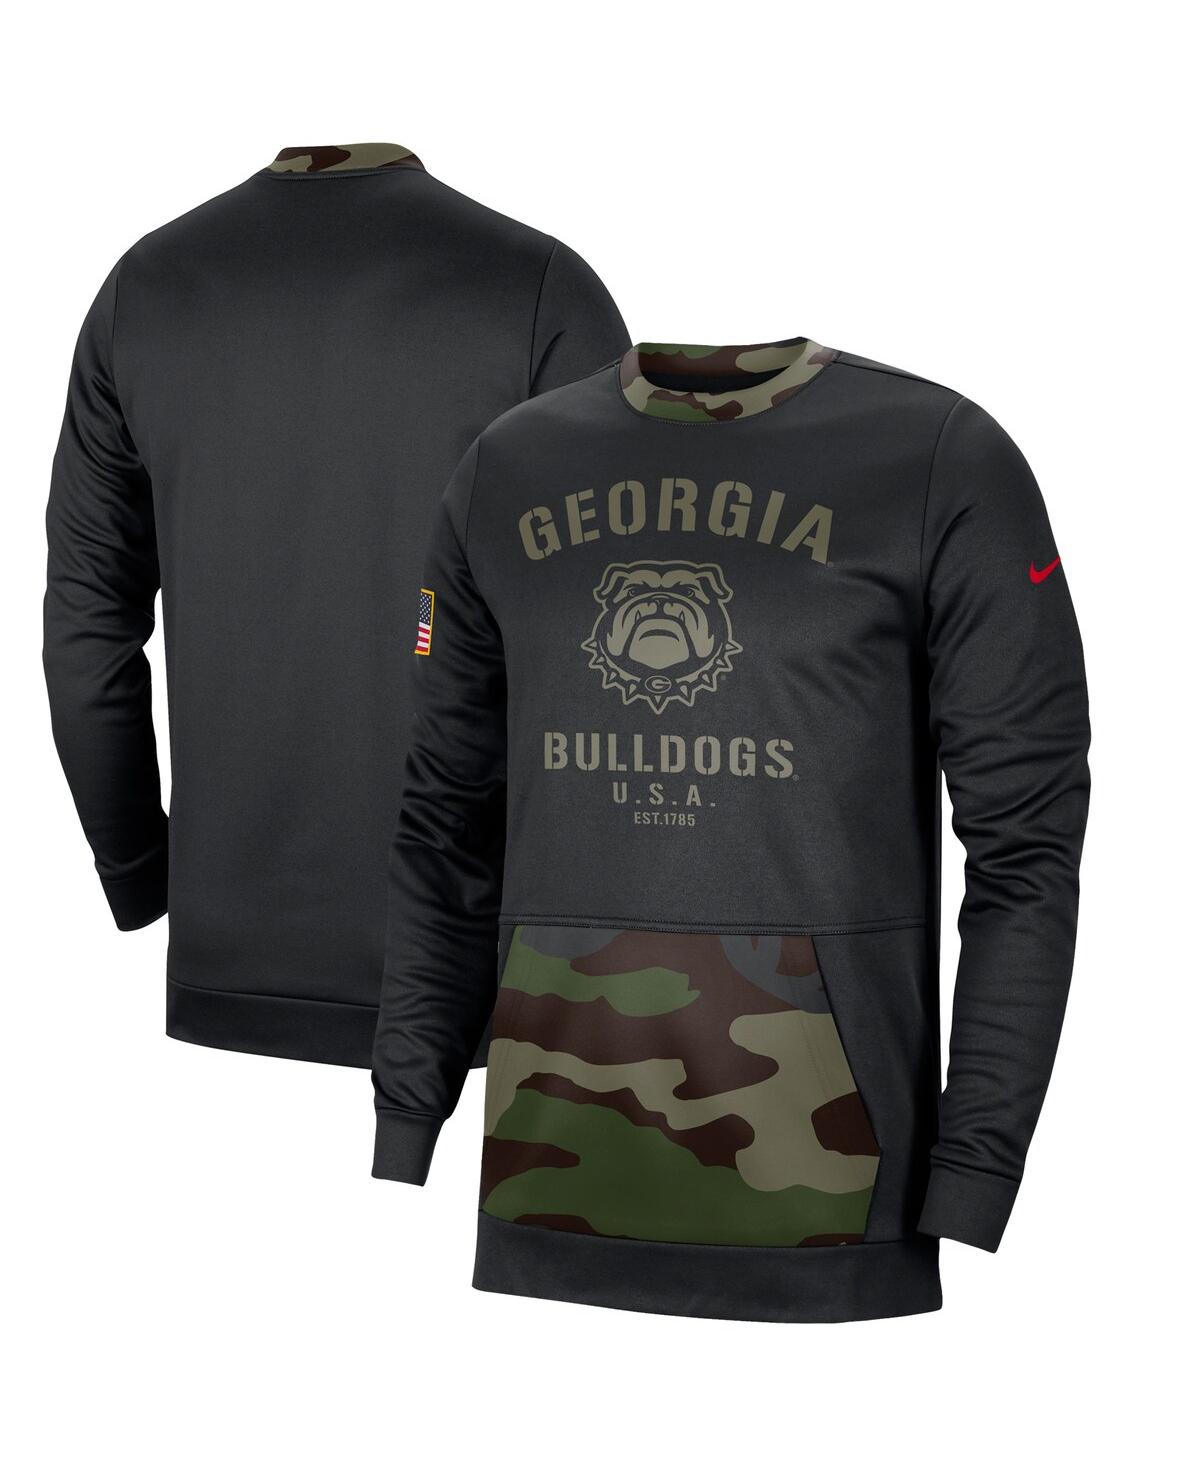 Nike Men's Black, Camo Georgia Bulldogs Military-inspired Appreciation Performance Pullover Sweatshirt In Black,camo